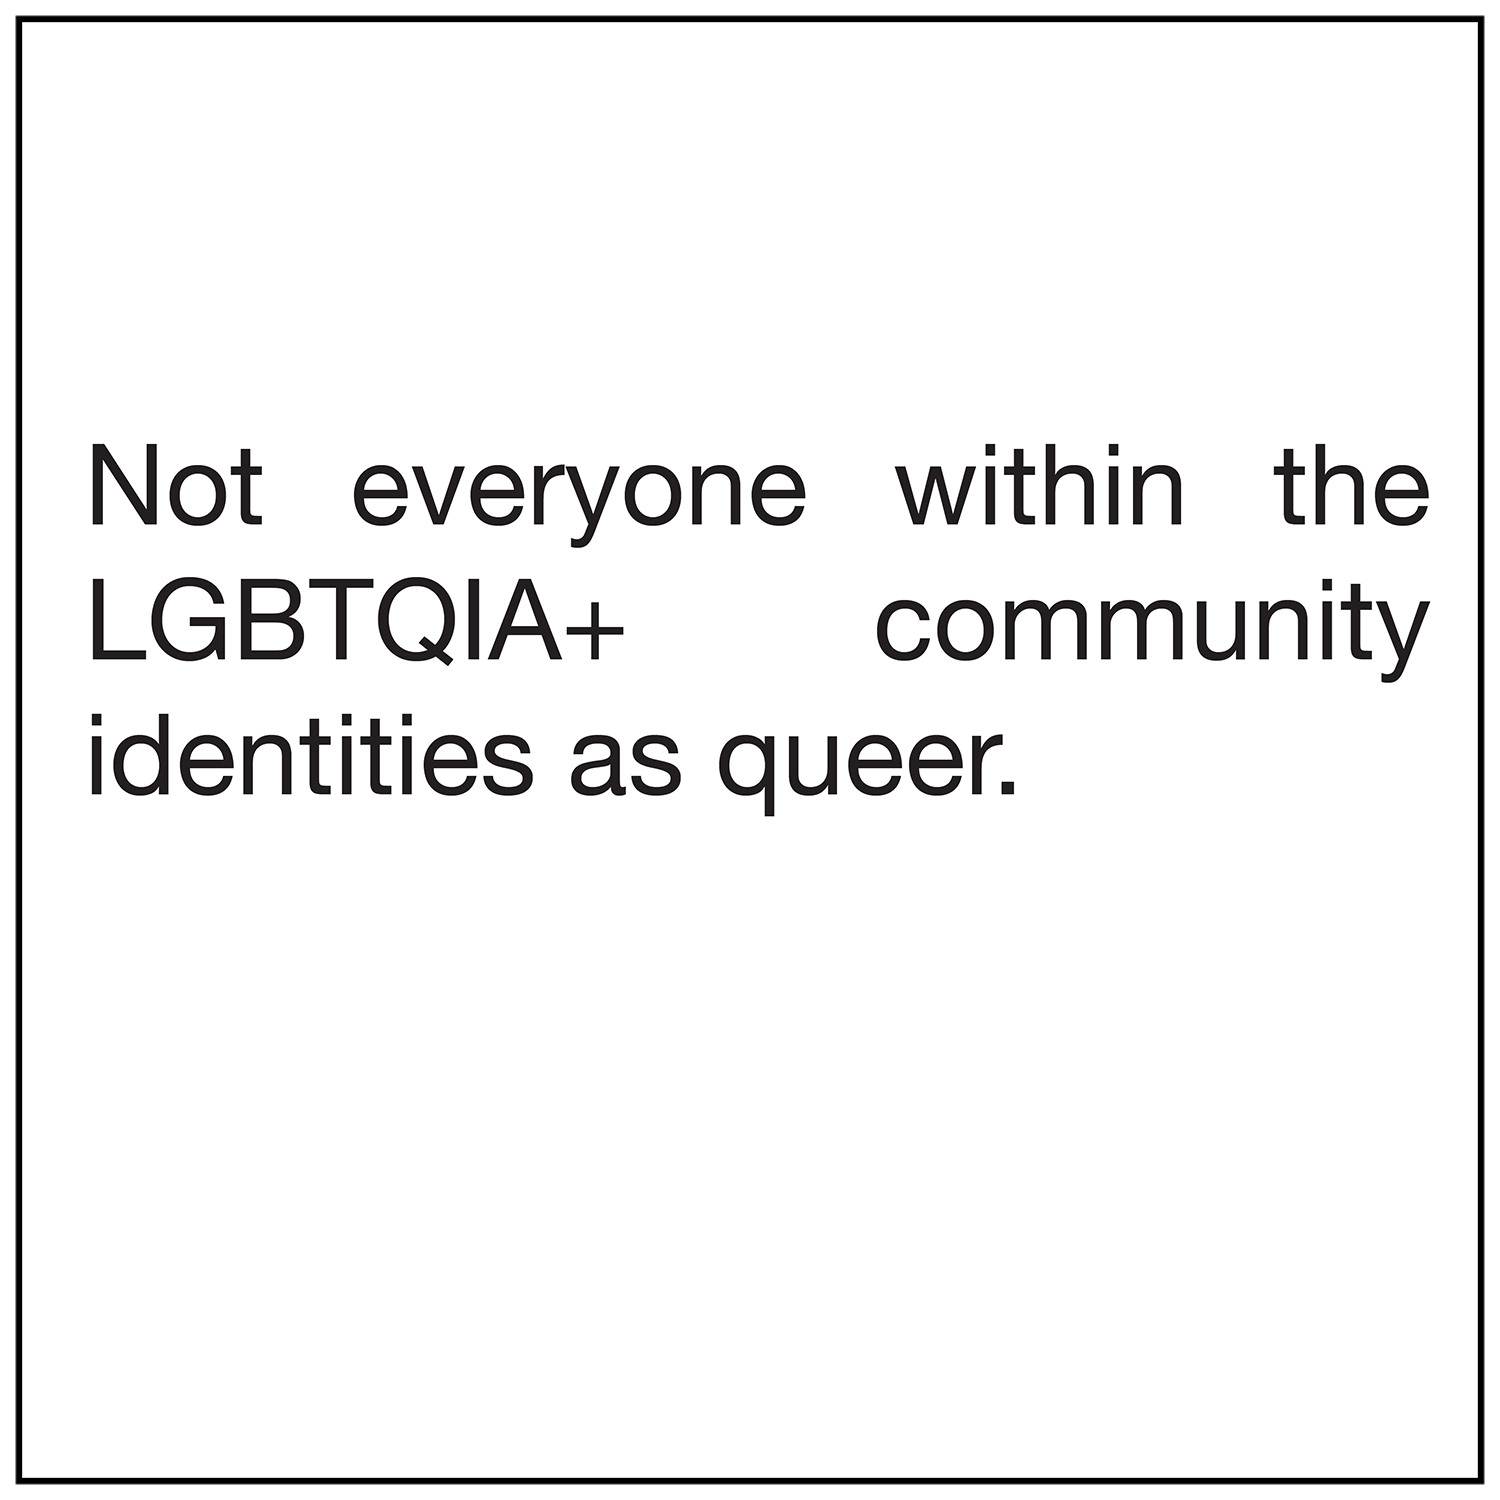 082720 GENDER RESOURCES LGBTQ QUEER-4.png